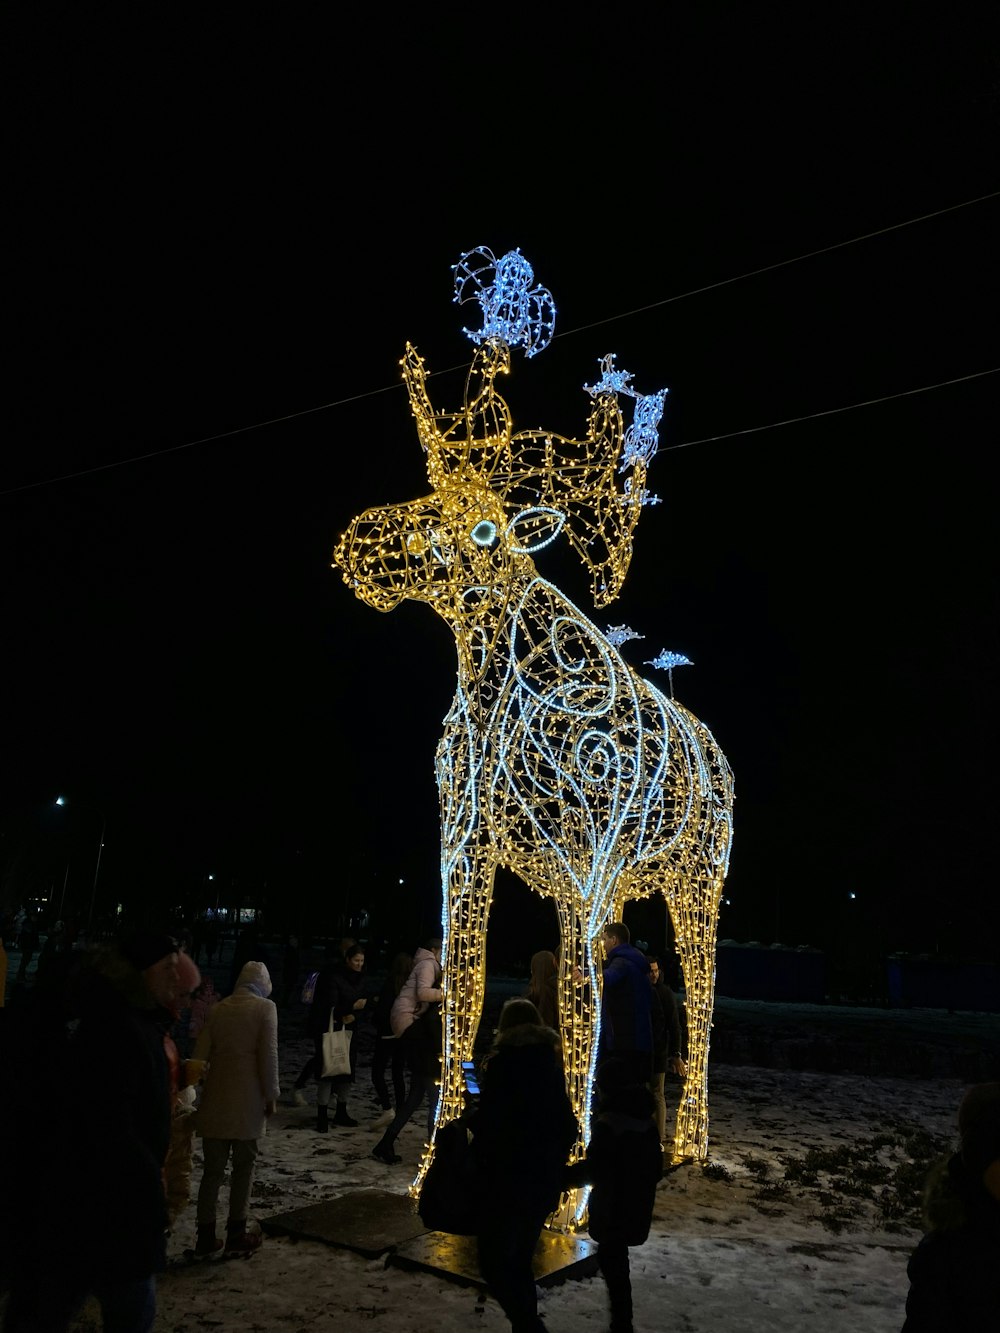 a light sculpture of a reindeer with a bird on its back